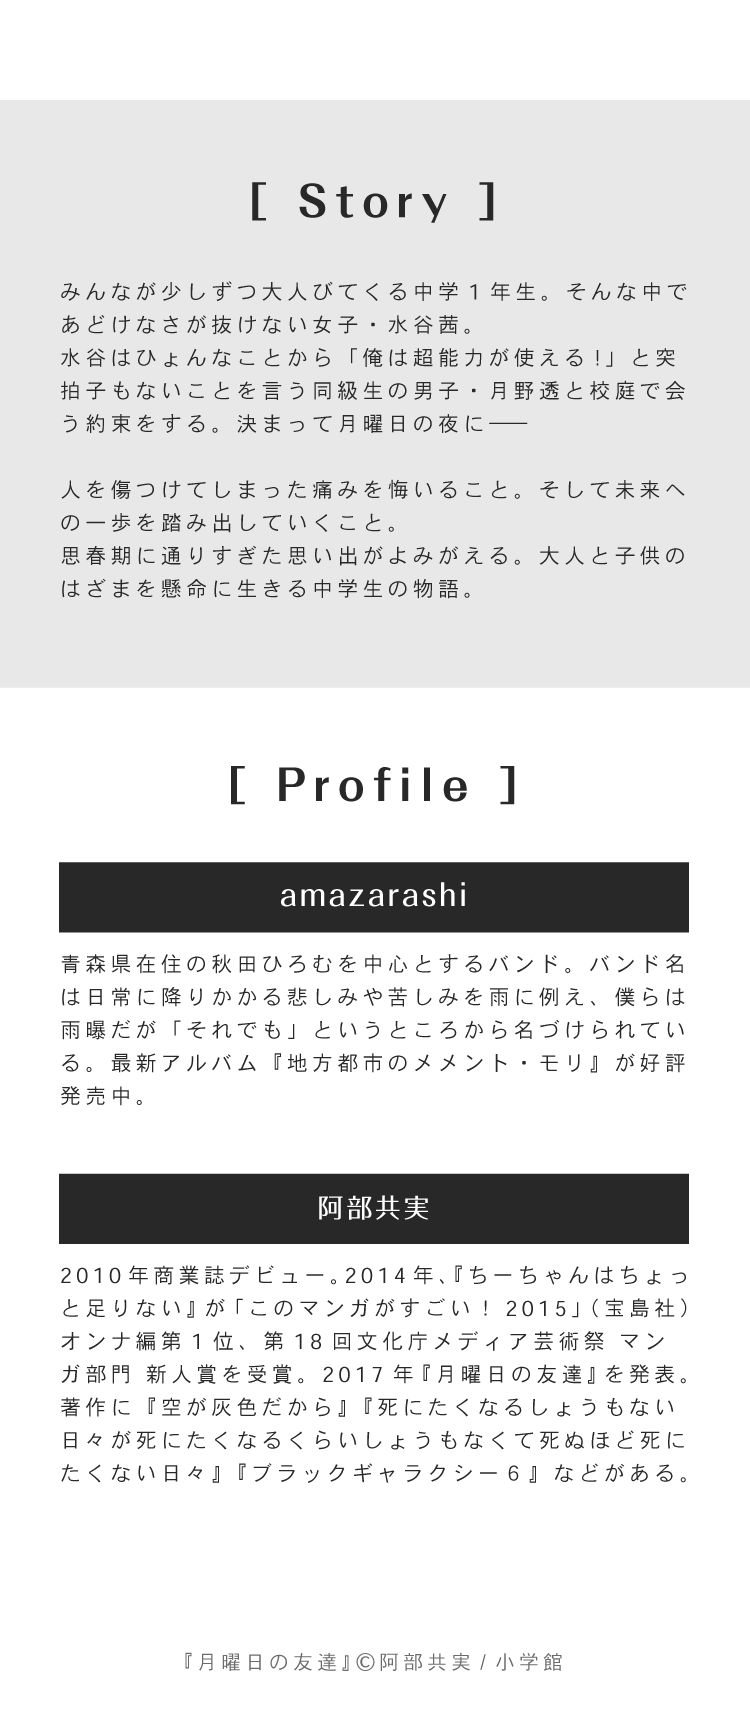 amarzarashi×月曜日の友達キャンペーン